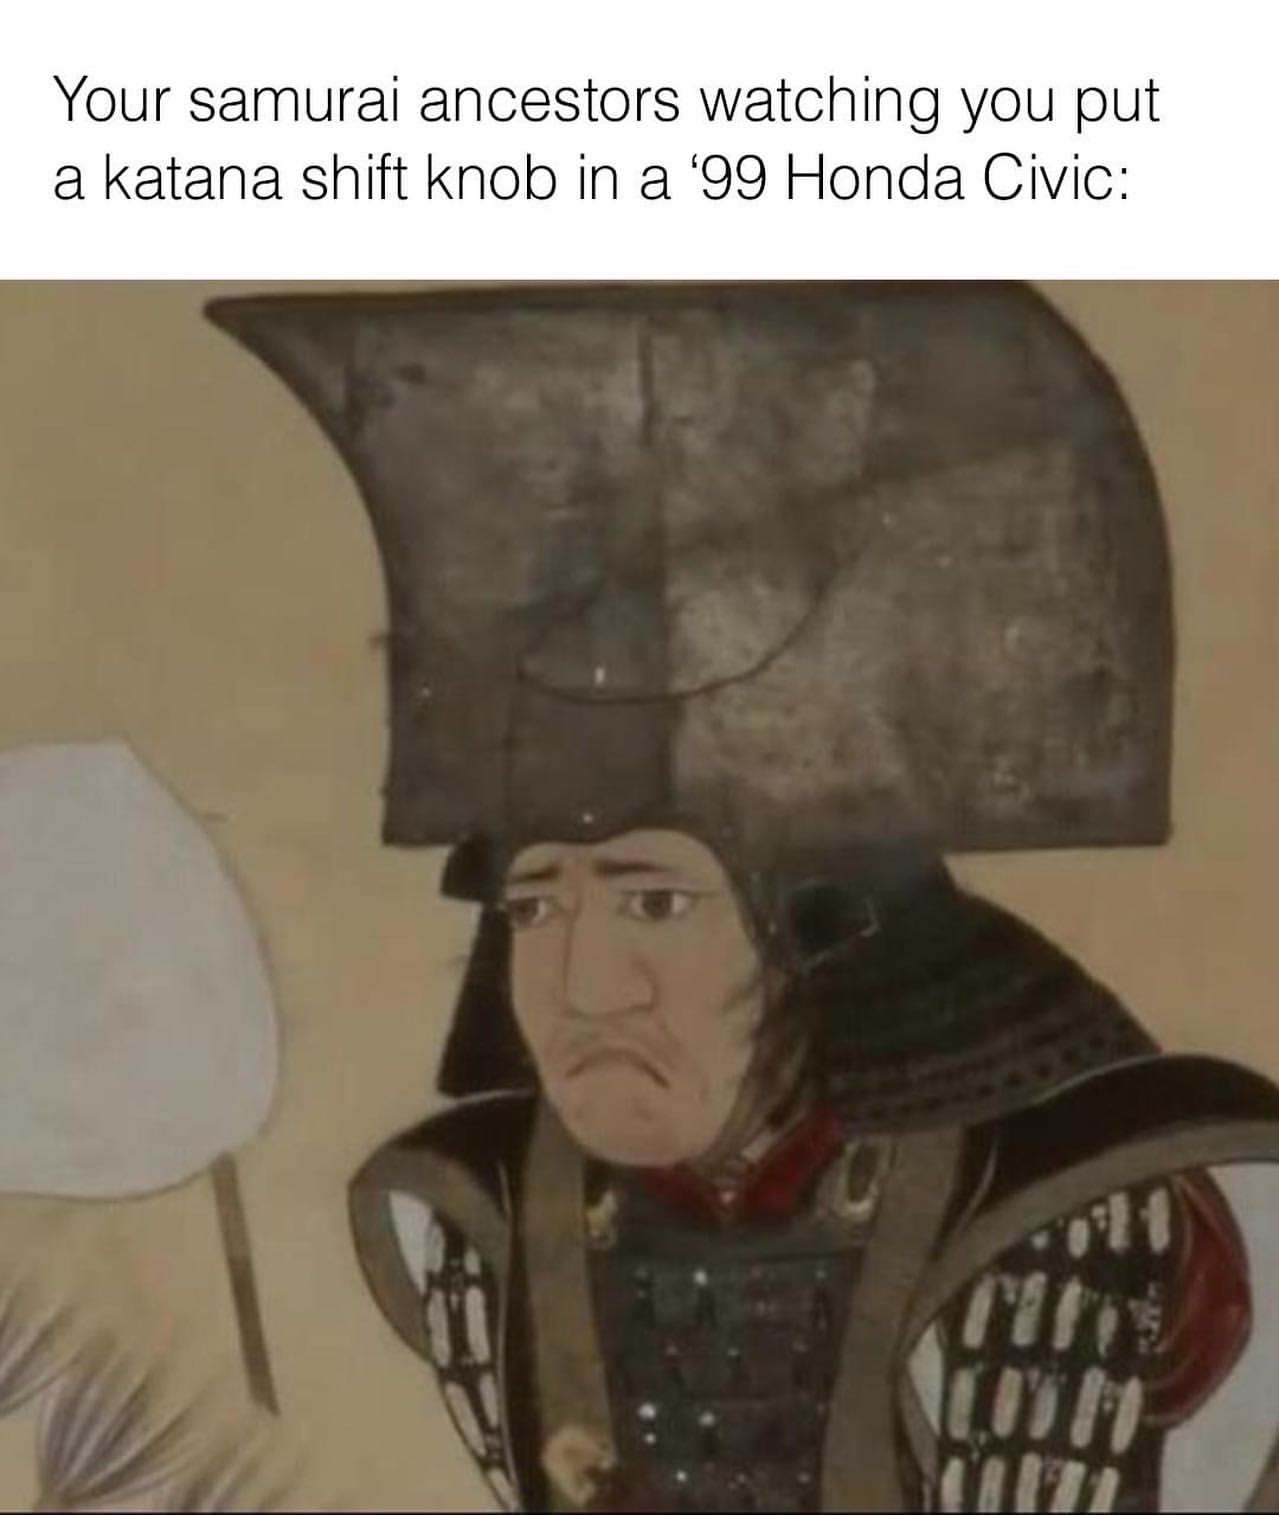 Your samurai ancestors watching you put a katana shift knob in a '99 Honda Civic: